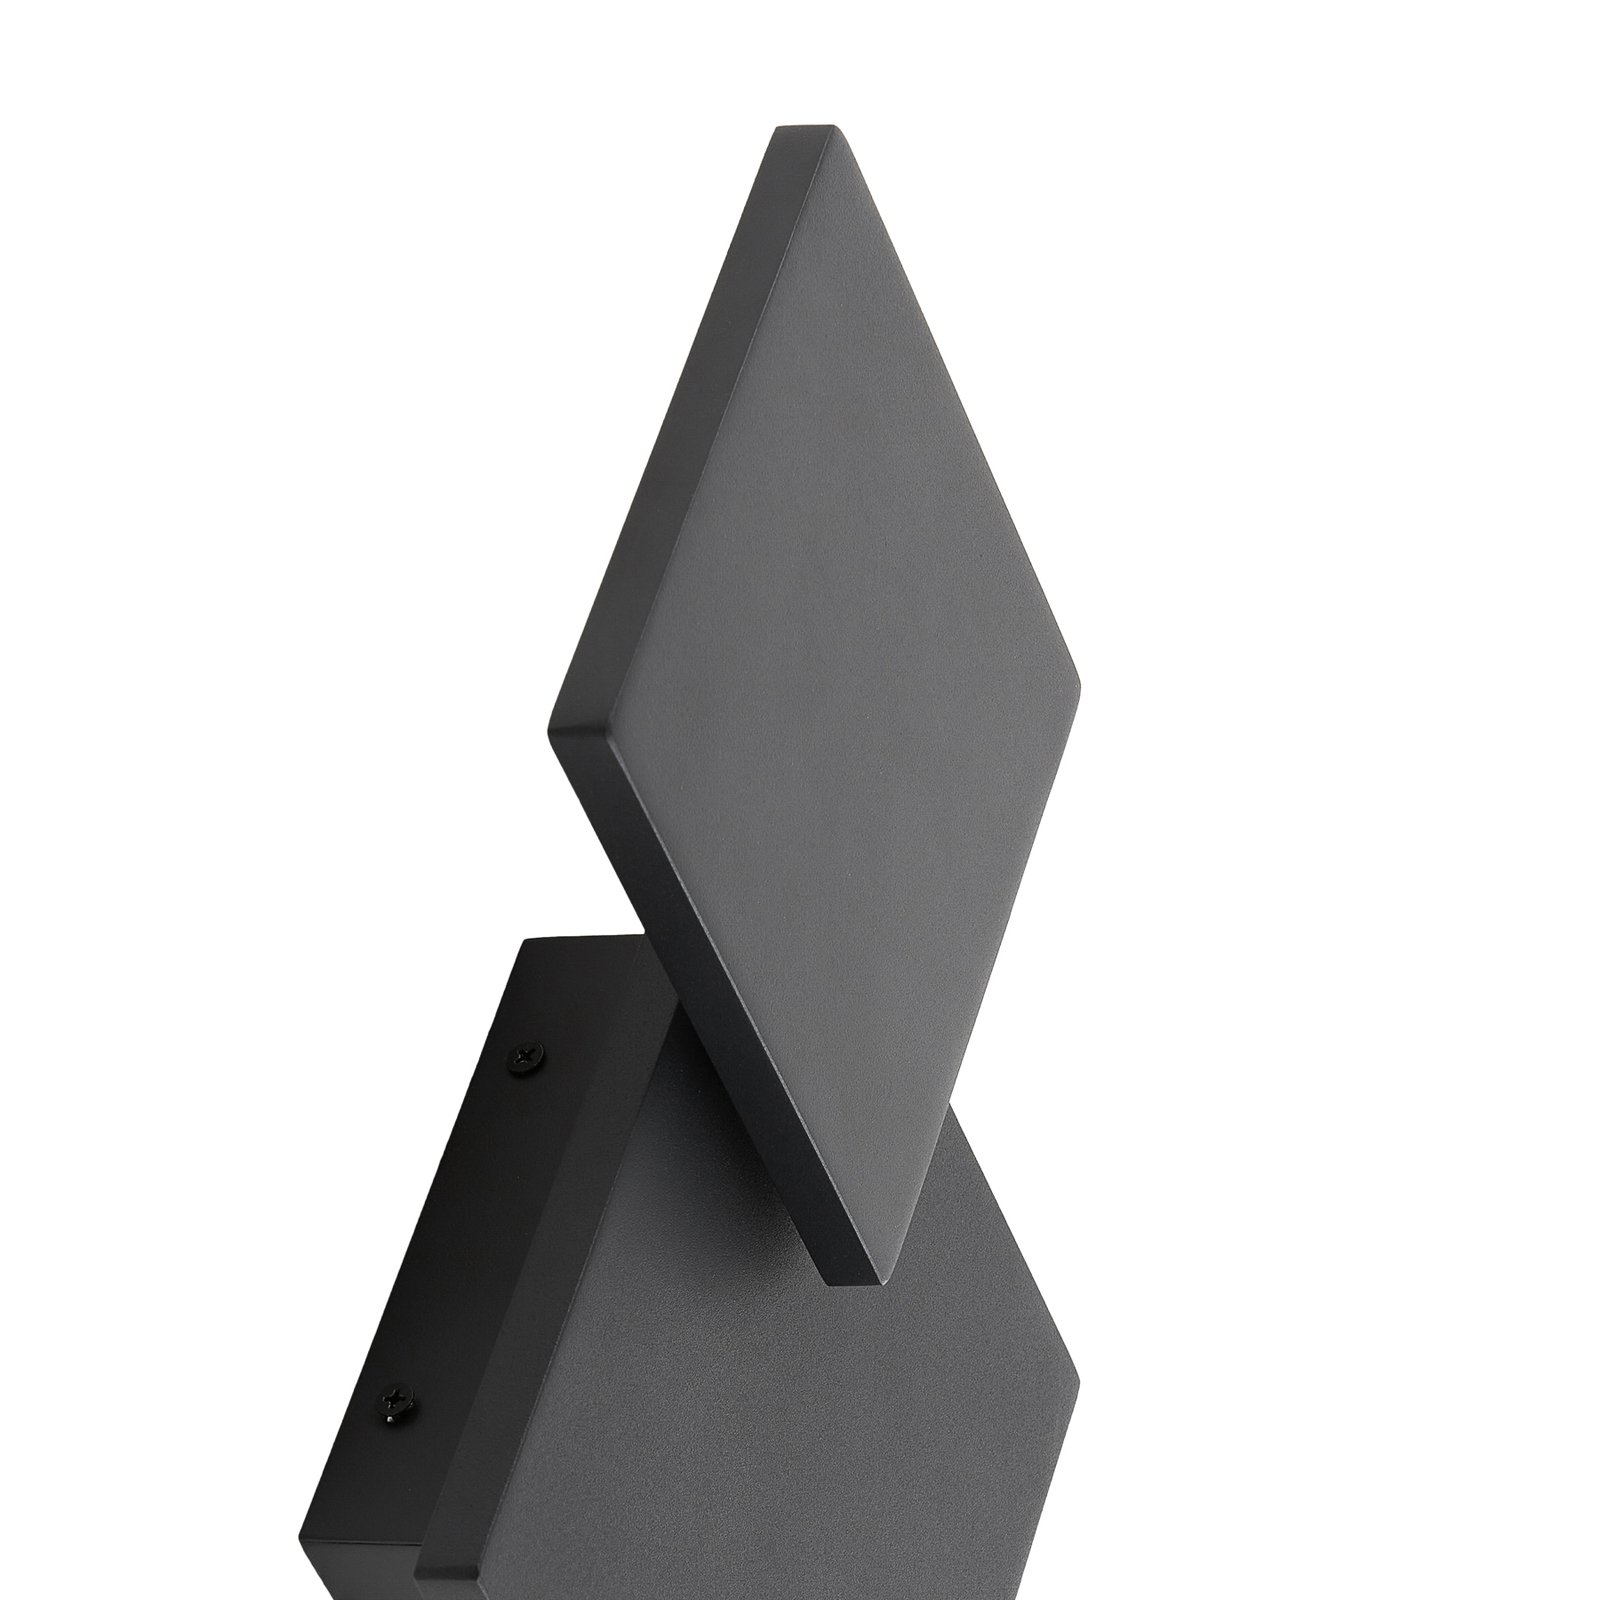 Lucande LED-vägglampa Elrik, svart, 27 cm hög, metall